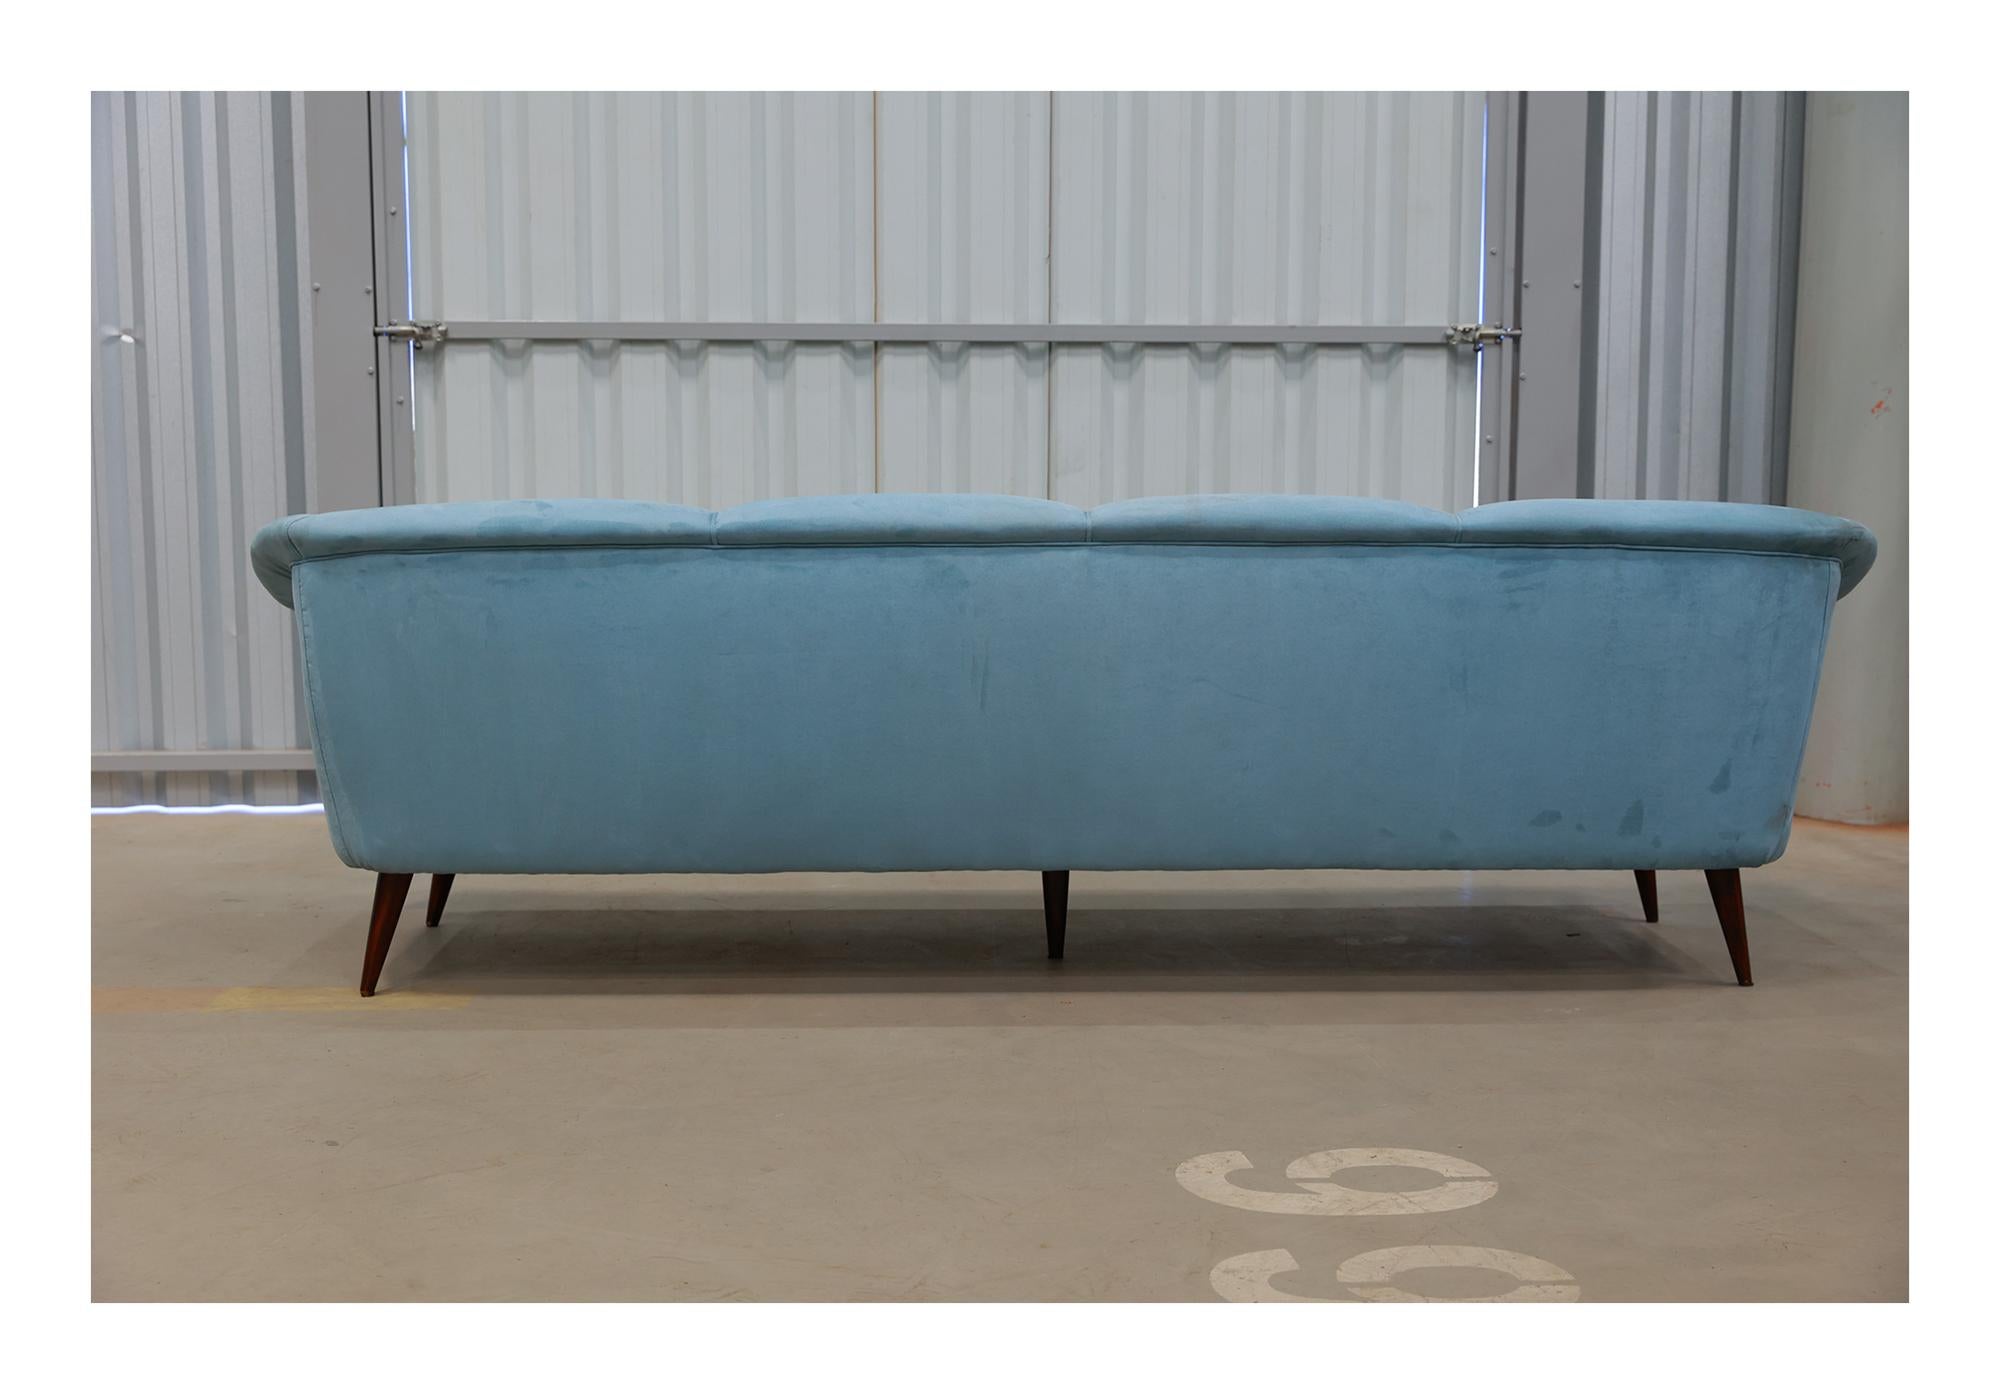 Woodwork Brazilian Modern Sofa in Hardwood & Light Blue Fabric, Joaquim Tenreiro, c. 1960 For Sale